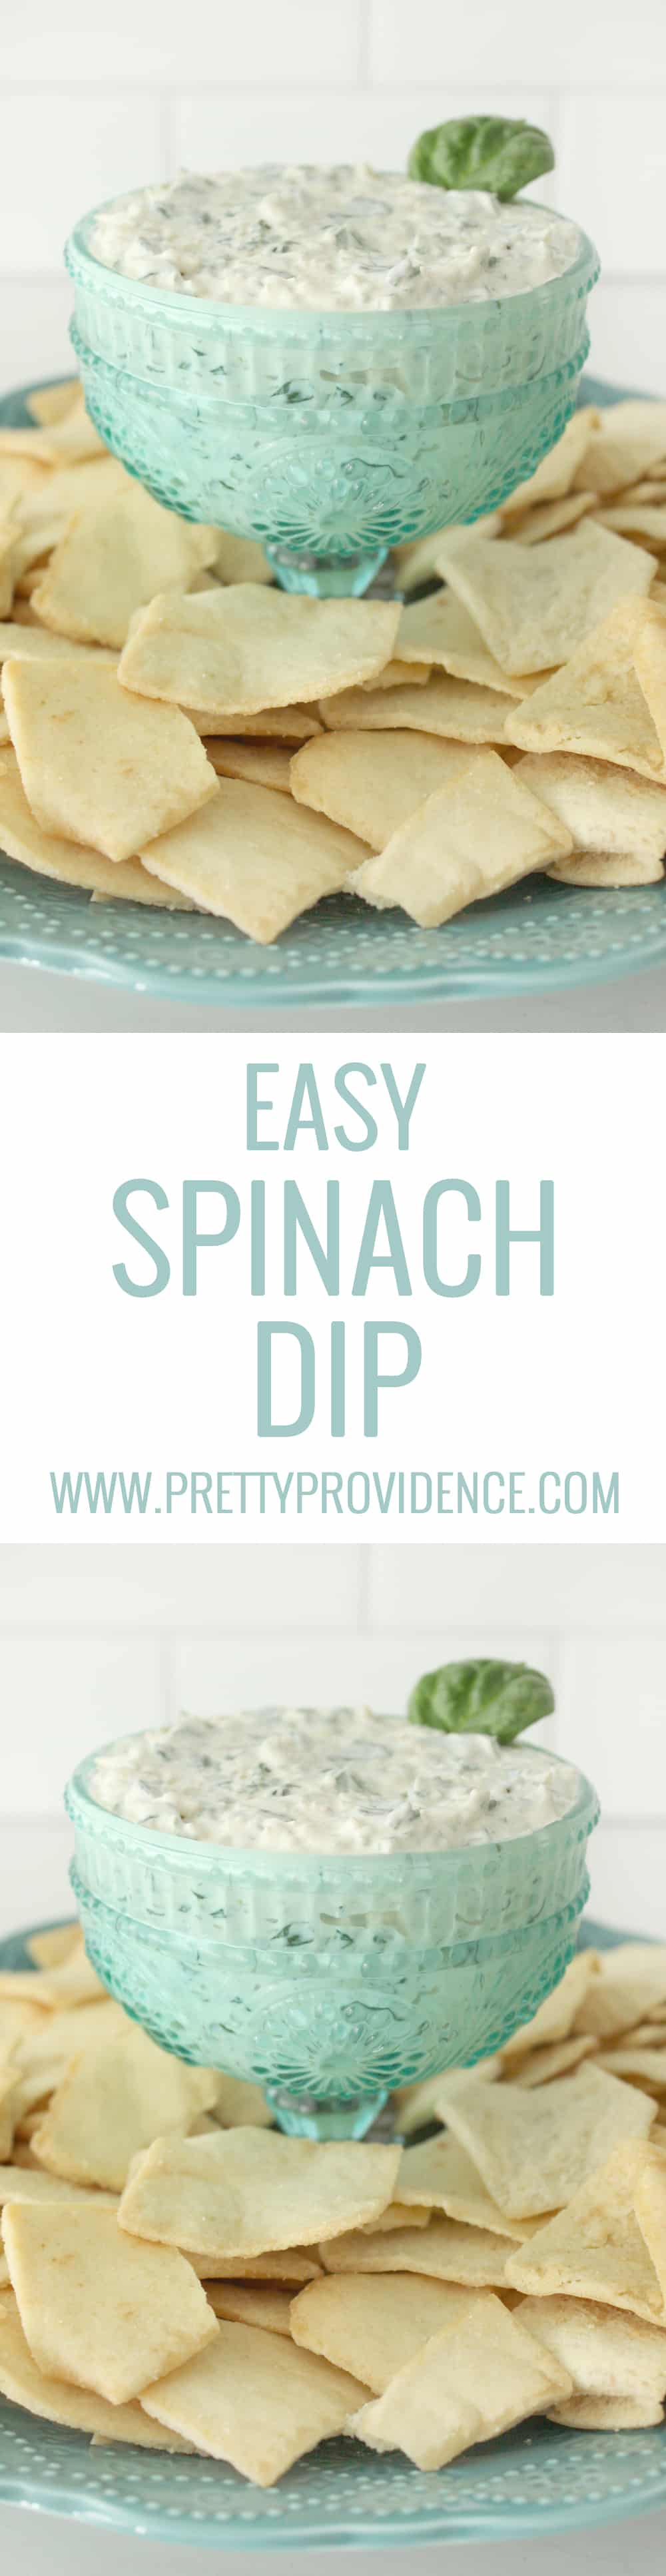 easy-spinach-dip-pinterest